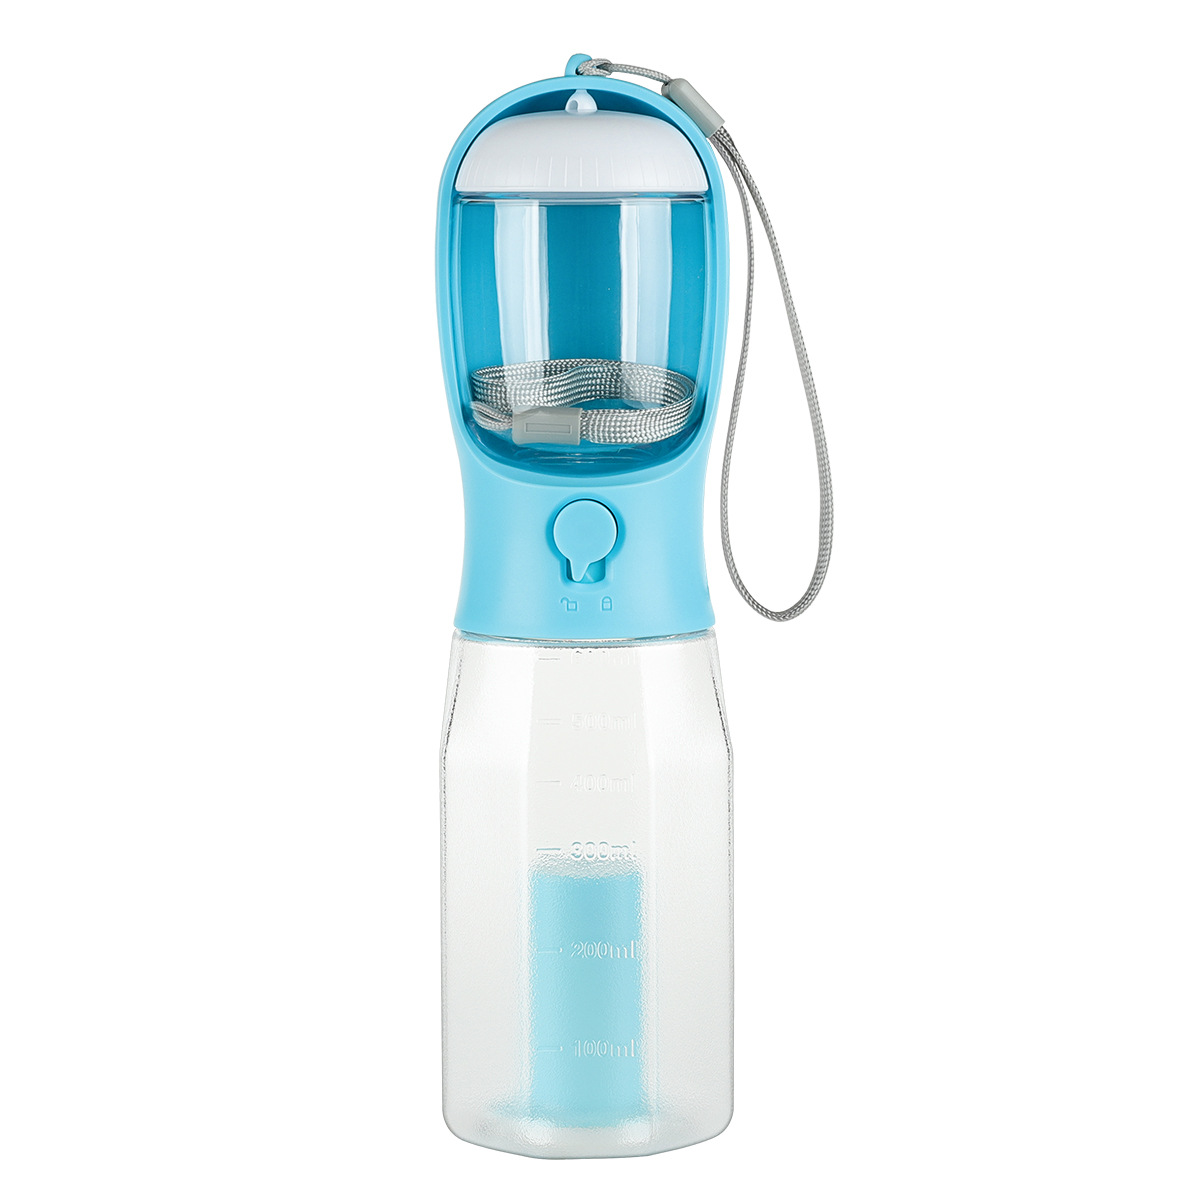 Innoshopp Dog Water Bottle - Portable Travel Dog Water Dispenser Including  Carabiner & Waste Bag Dispenser - Leak Proof & BPA Free Dogs Drinking Bottle  for Walking, Hiking & Travel